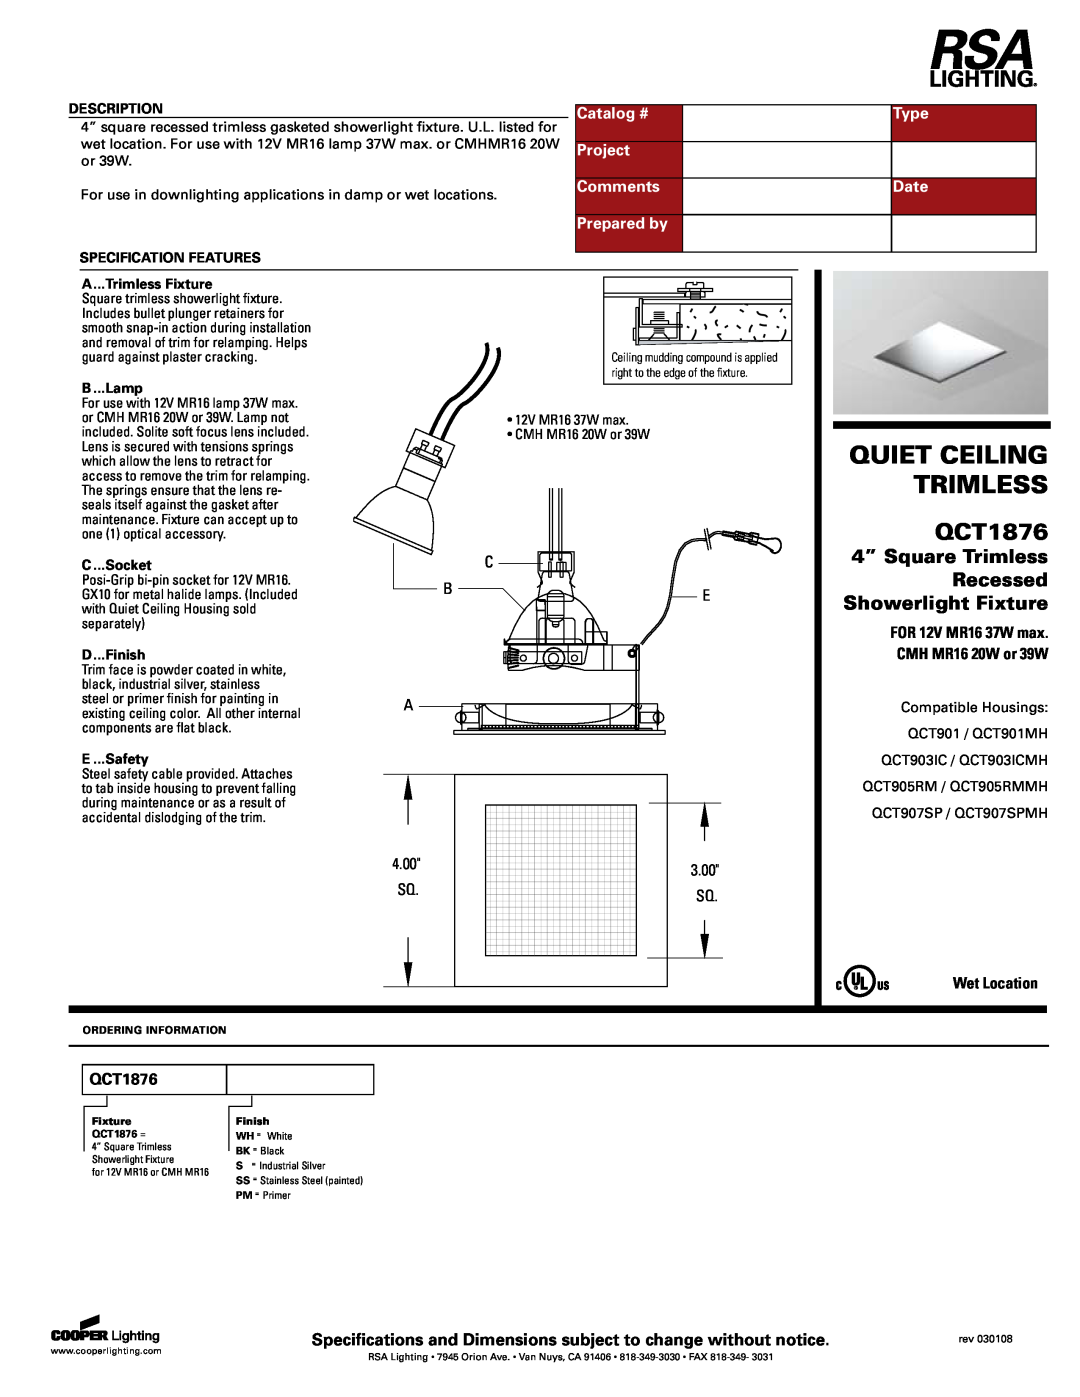 Cooper Lighting QCT1876 specifications Quiet Ceiling, 4” Square Trimless, Recessed, Showerlight Fixture, Catalog # 